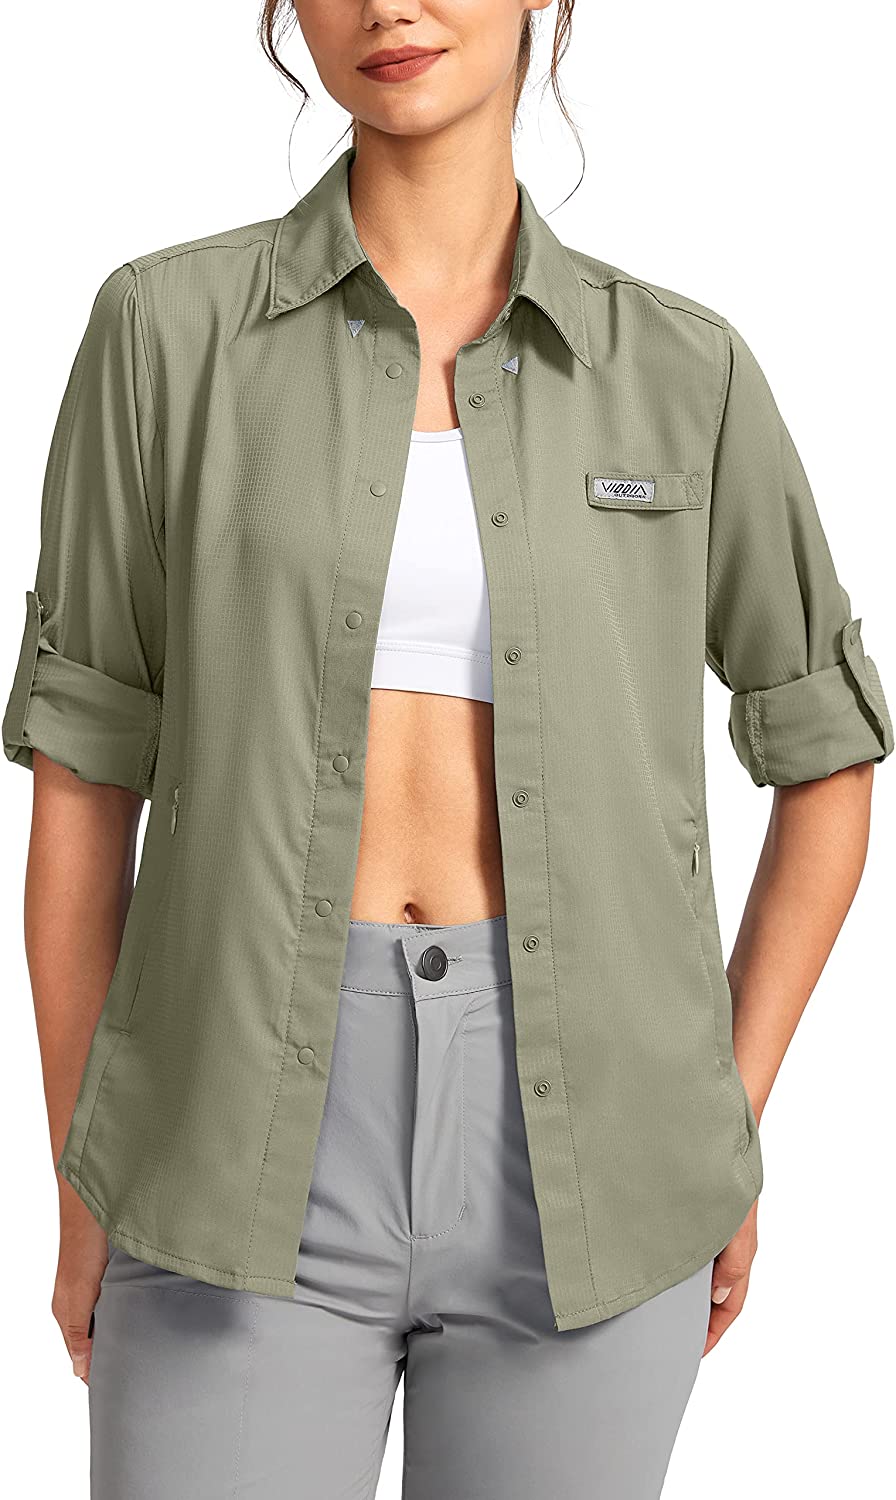 Womens Sun Protection Fishing Shirt with Zipper Pockets